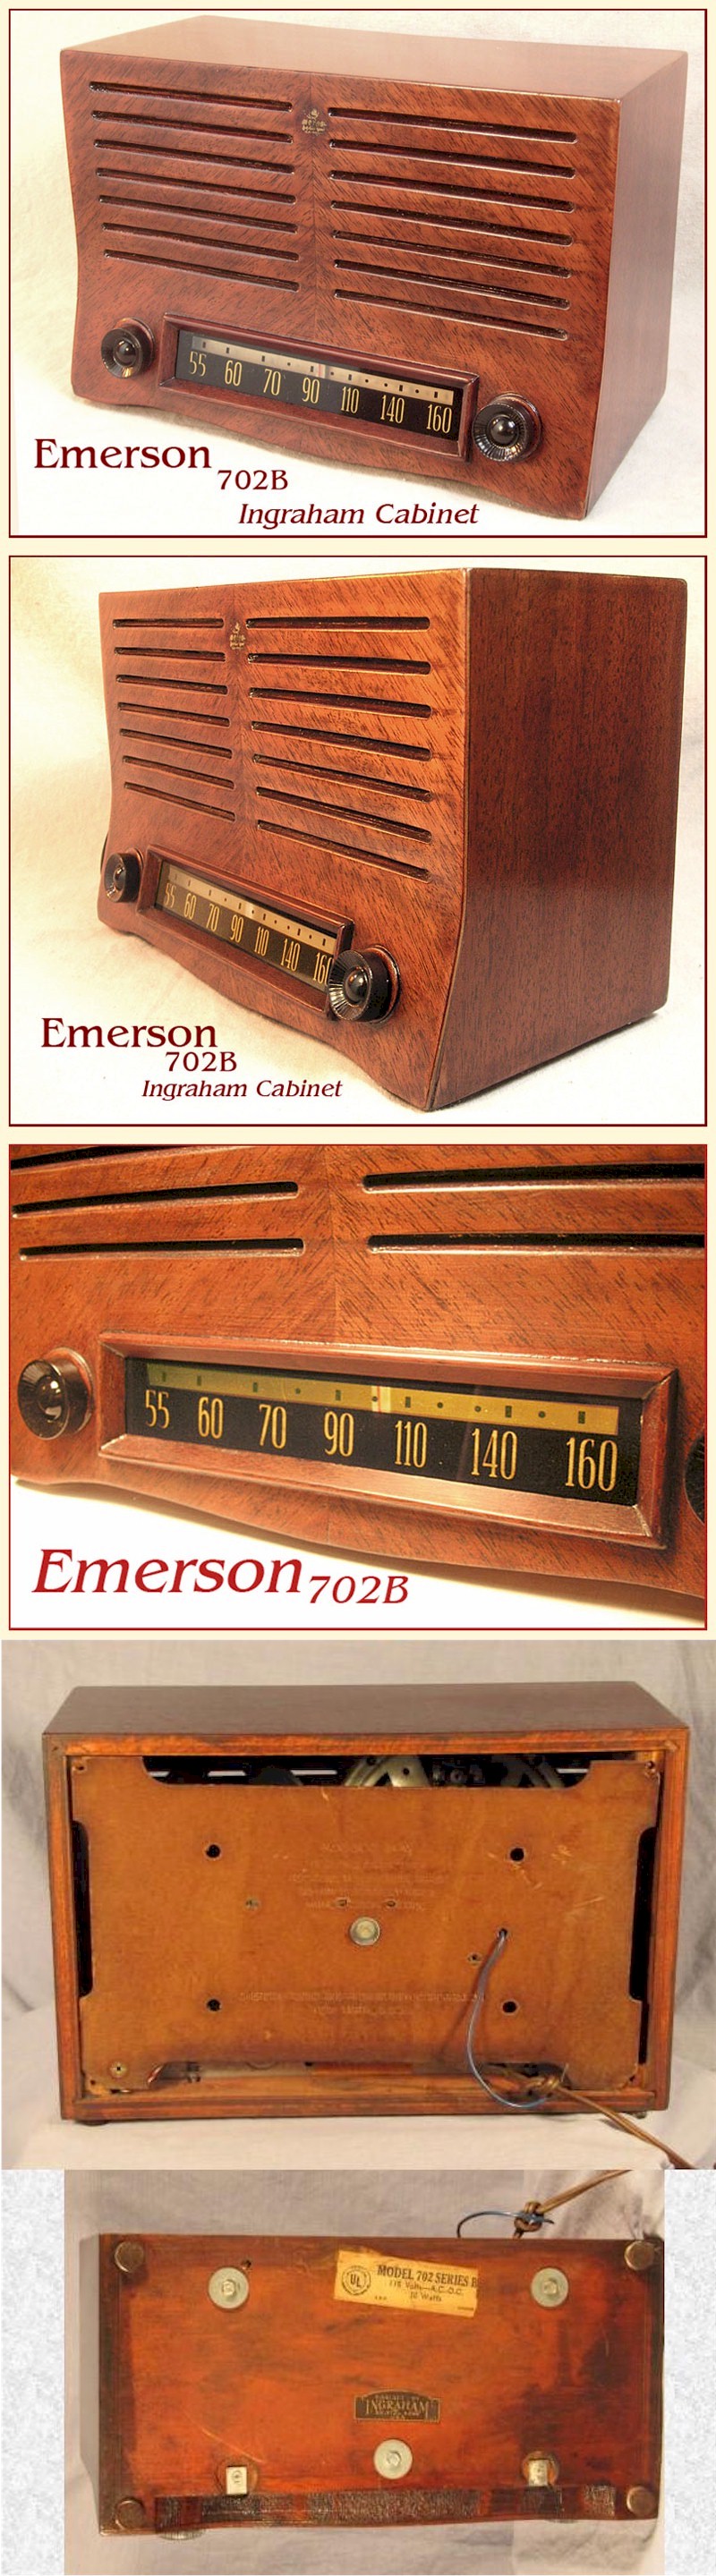 Emerson 702B 